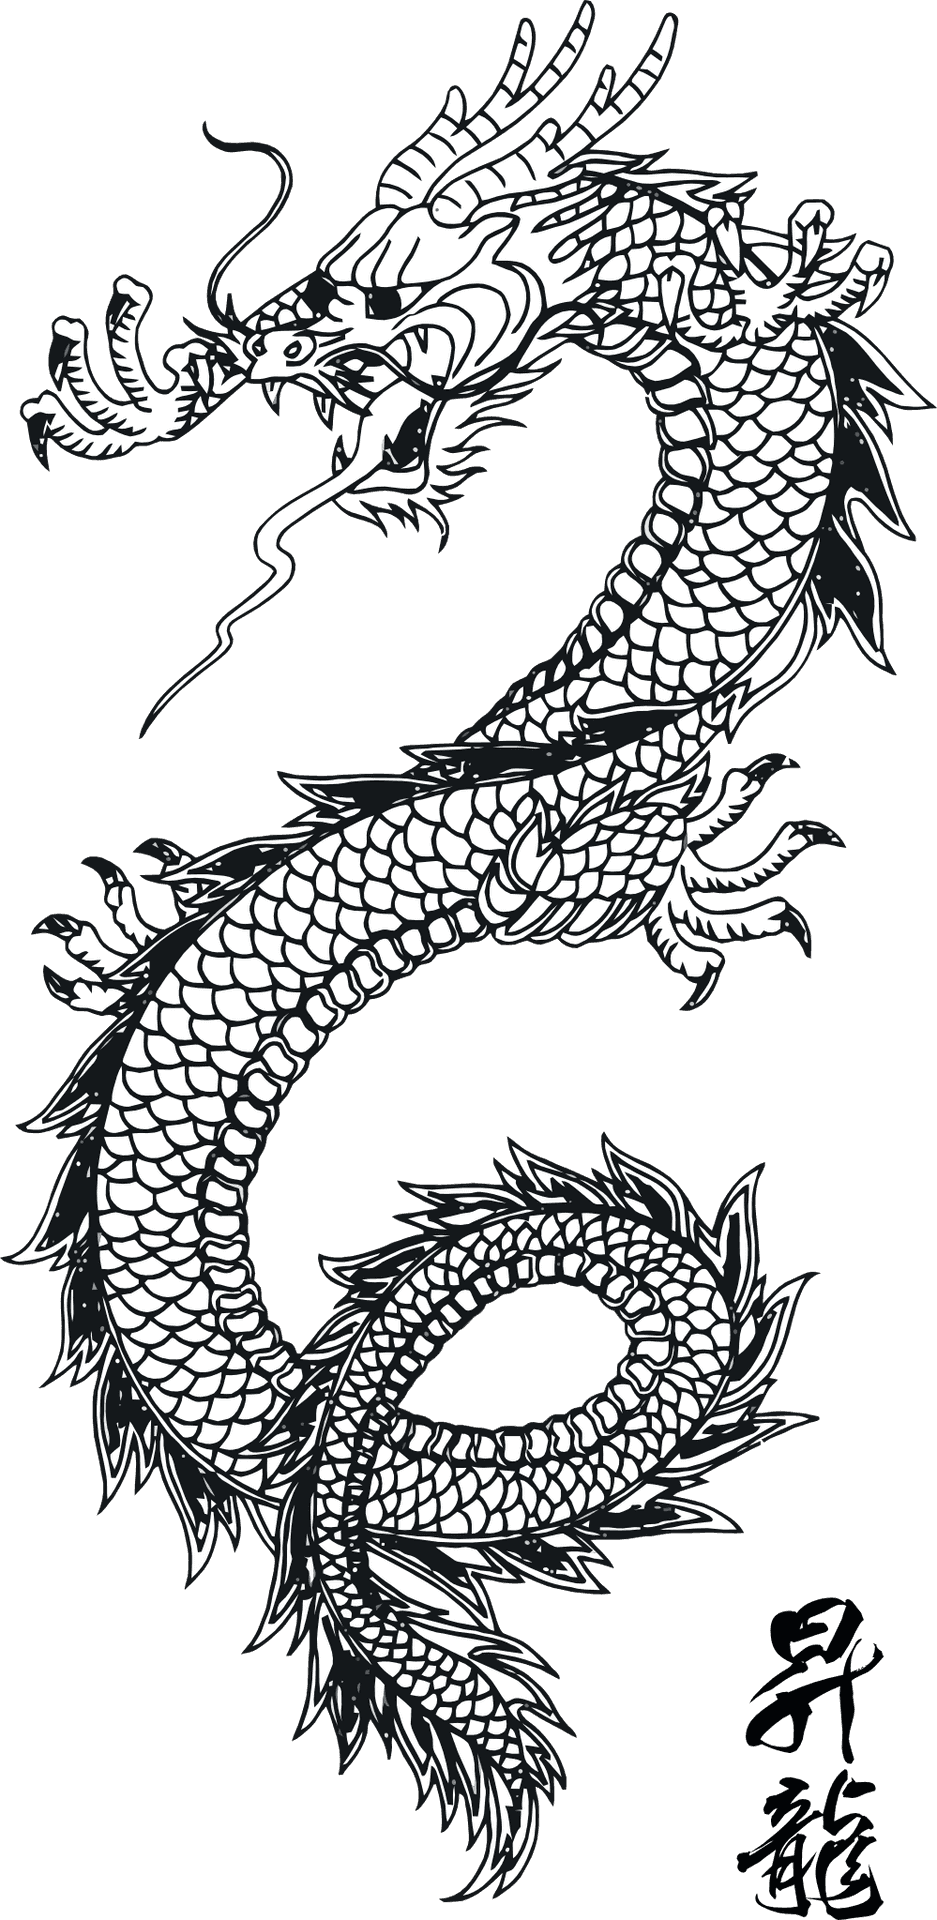 Intricate Dragon Tattoo Design PNG